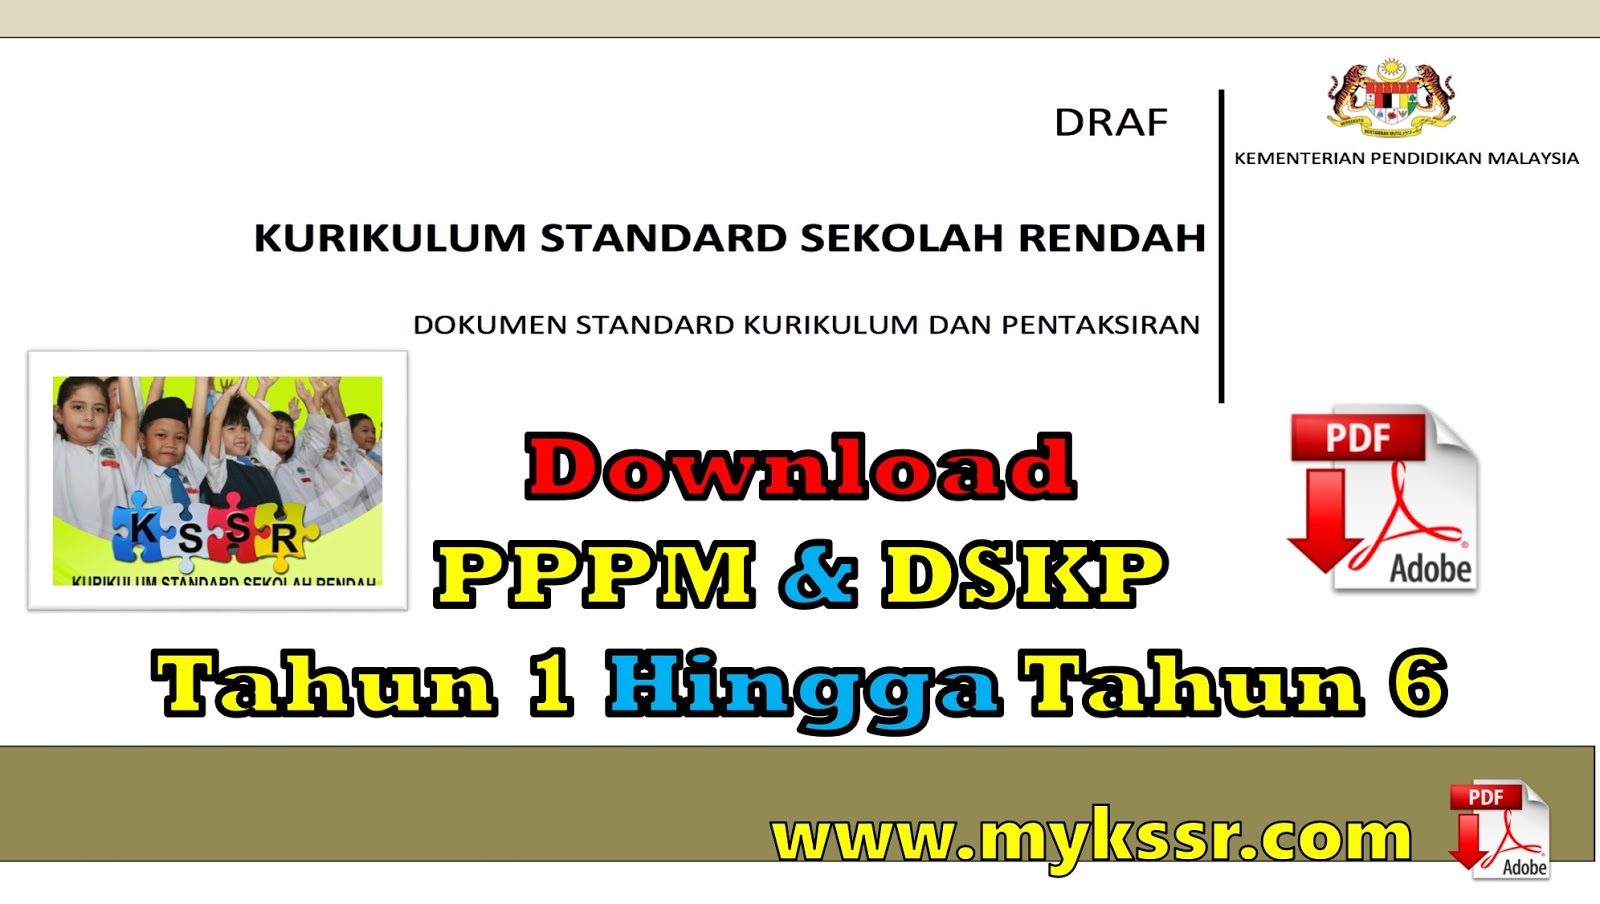 Download PPPM & DSKP Tahun 1 Hingga Tahun 6 - Mykssr.com